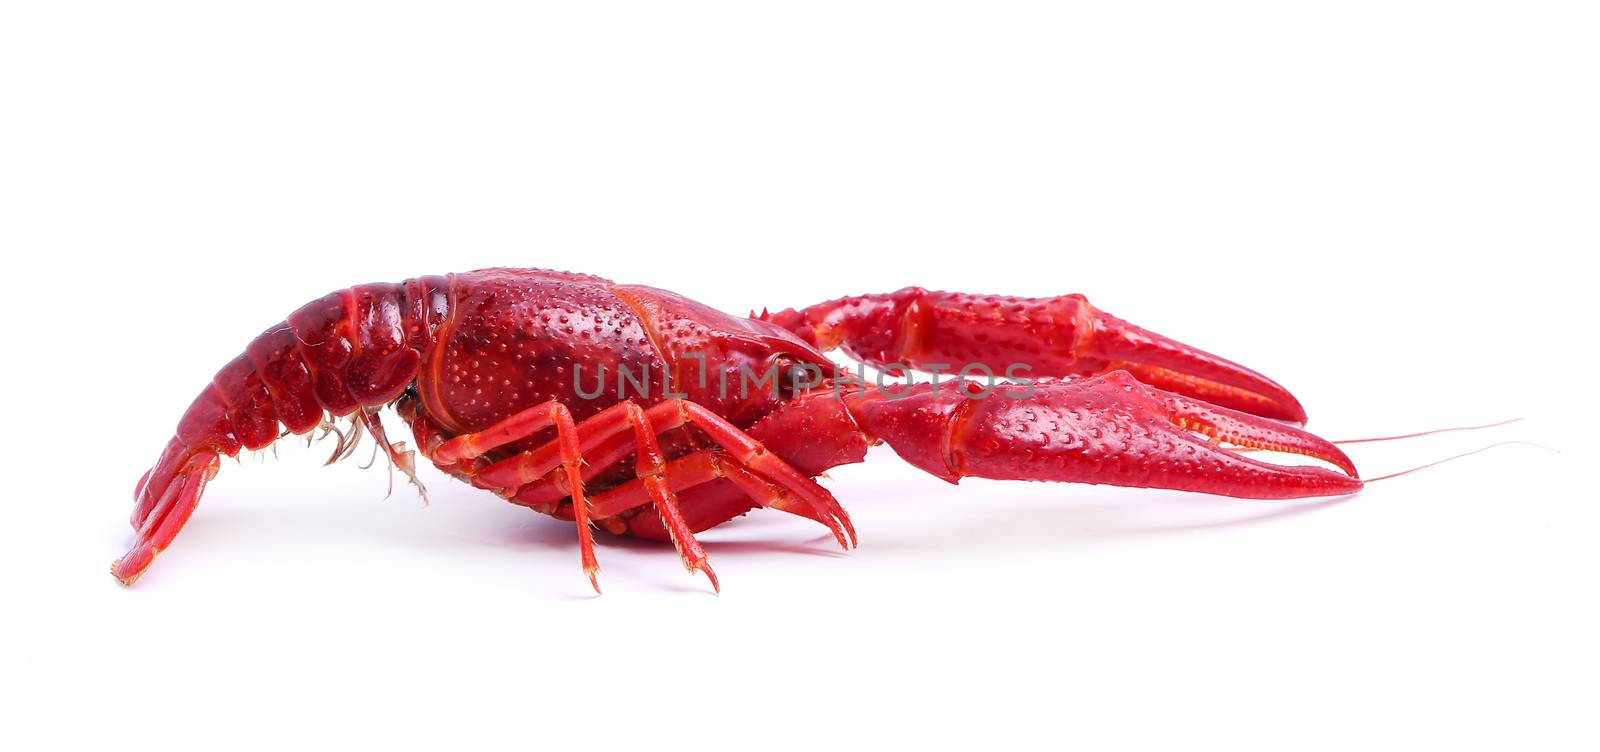 Delicious crayfish by rufatjumali